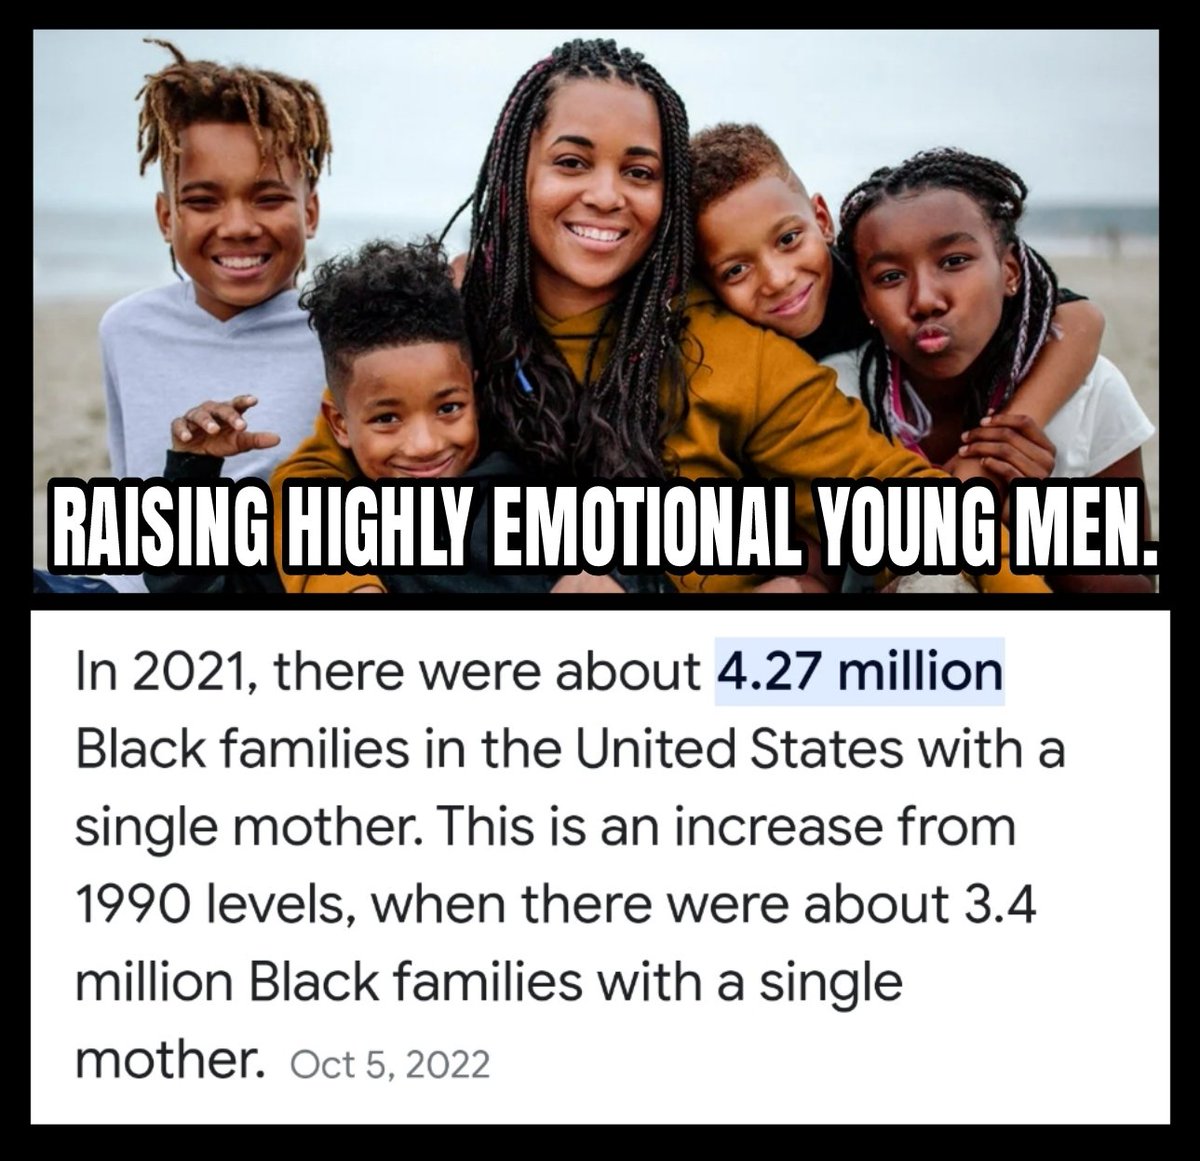 #BlackAmerica #BlackAmerican #Blackculture #Blackchildren #blackparents #blackmothers 
#singlemothers #Blackfathers
#Blackwomen #blackgirls #BLM 
#Blackwoman #BlackGirlsMagic 
#Blackgirltrain #Blacklove #BlackLivesMatter 
SIngle mom culture is not working